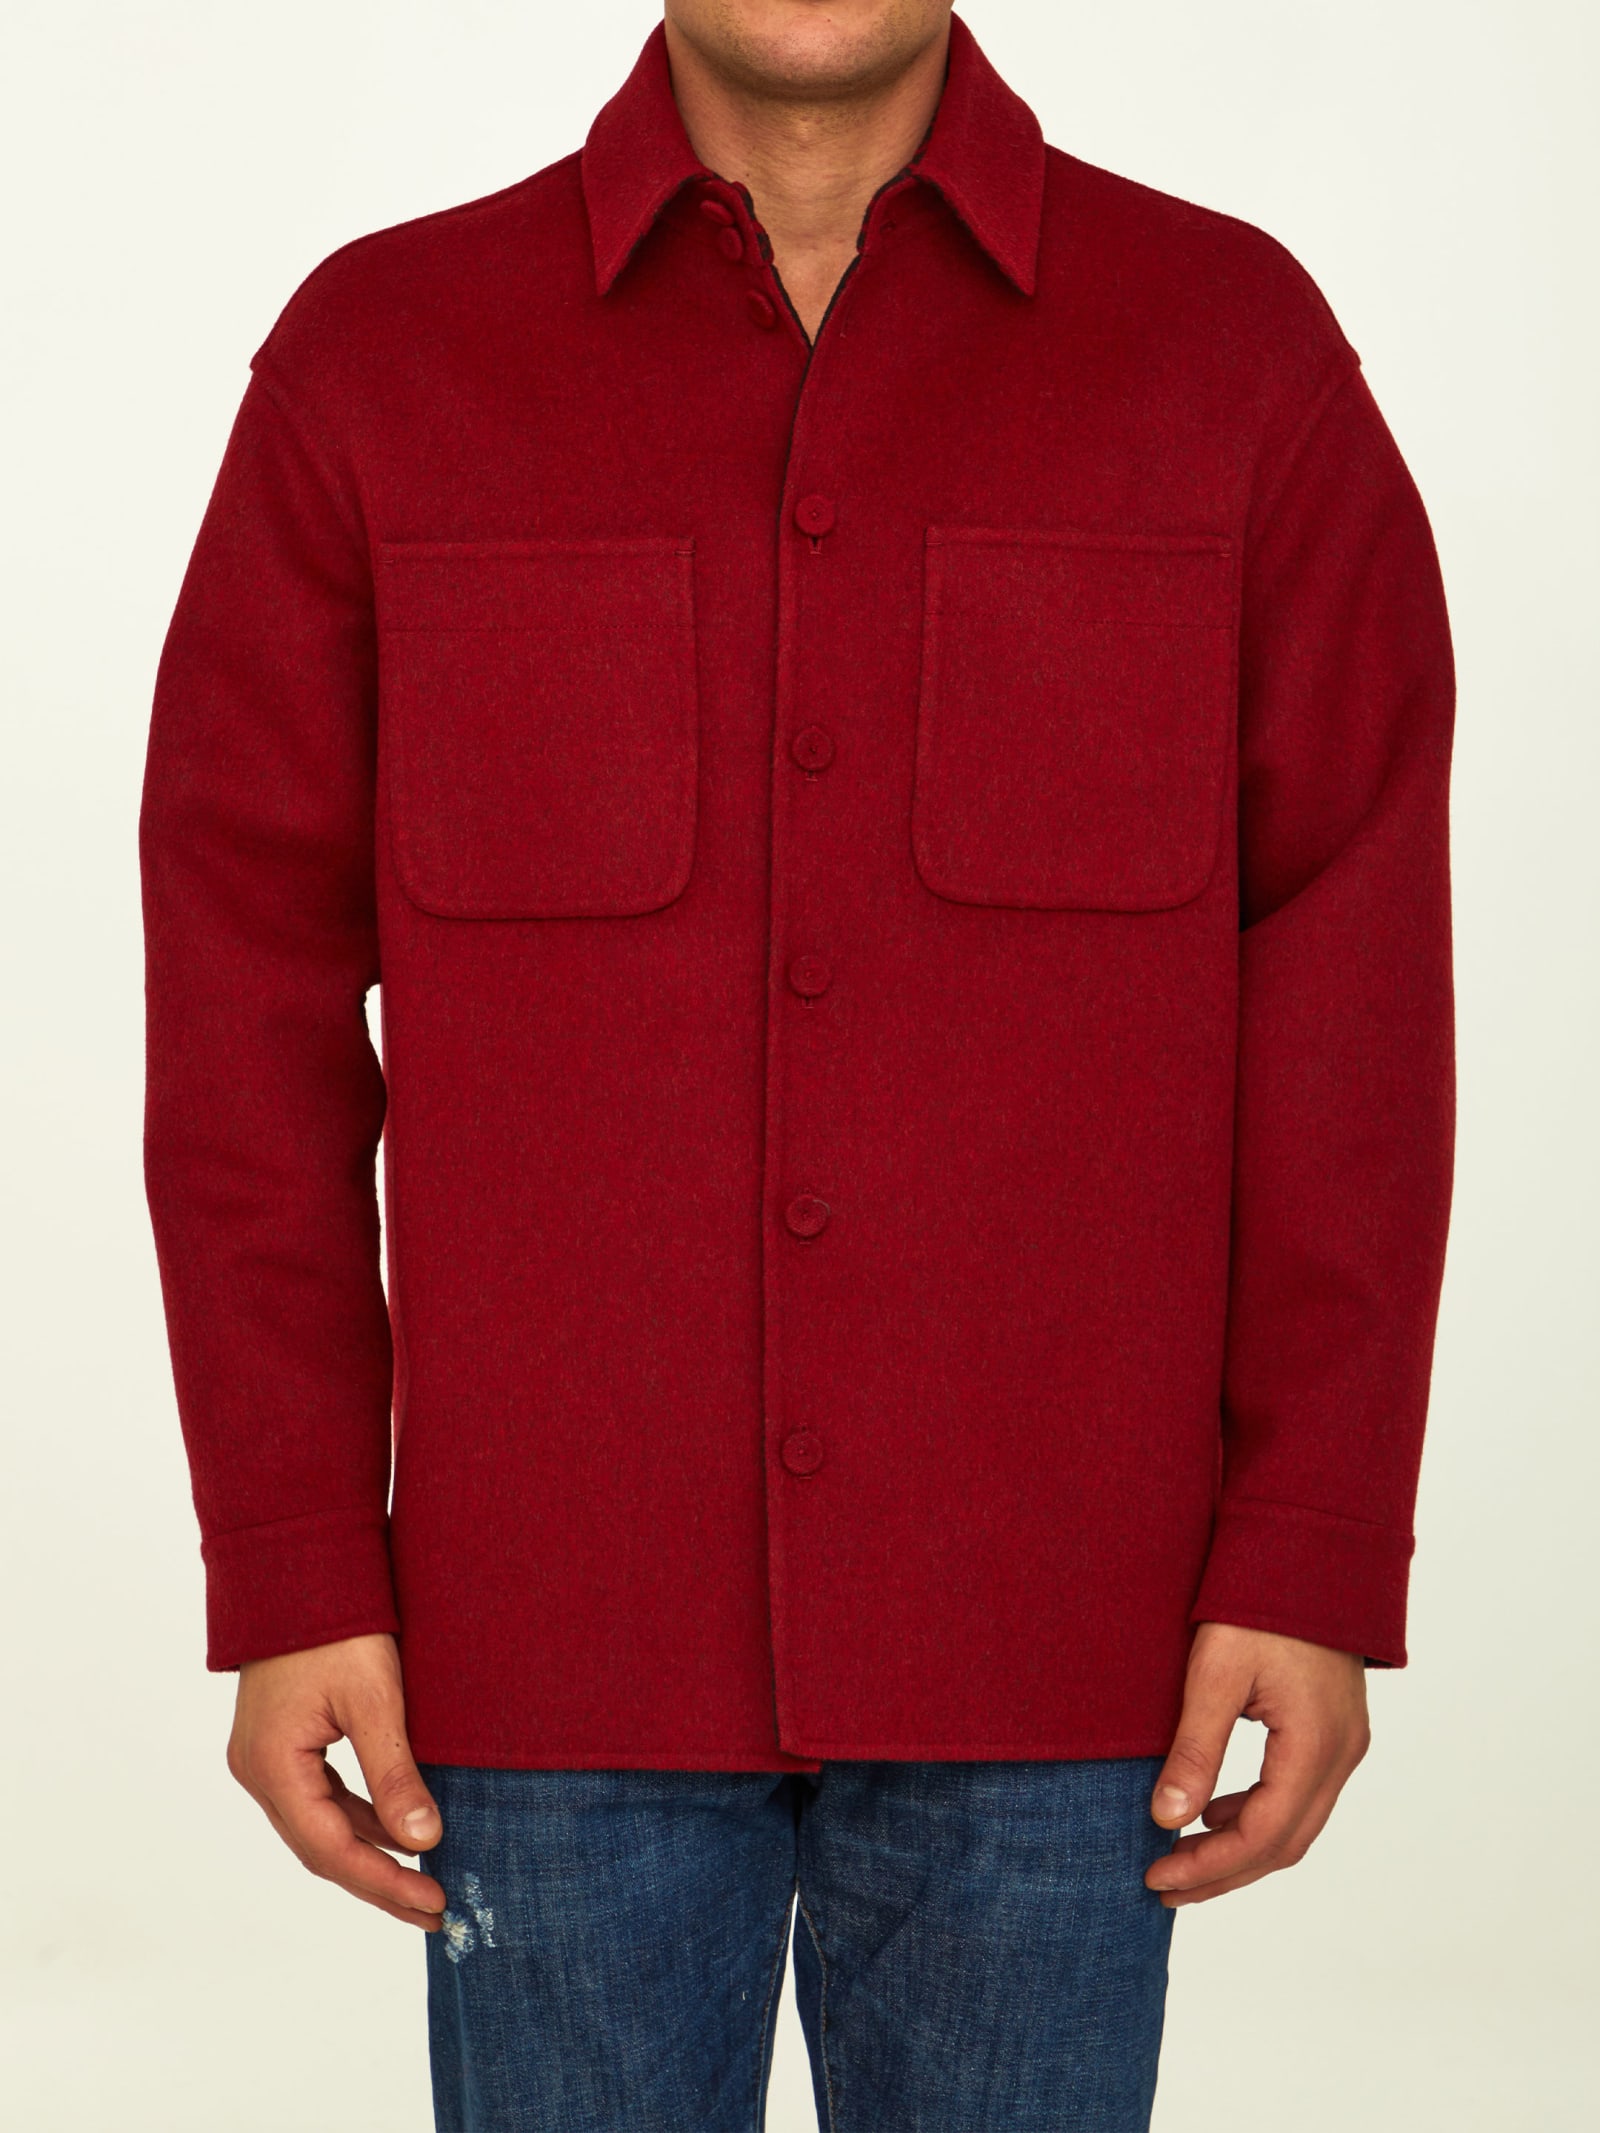 Fendi Red Wool Reversible Jacket